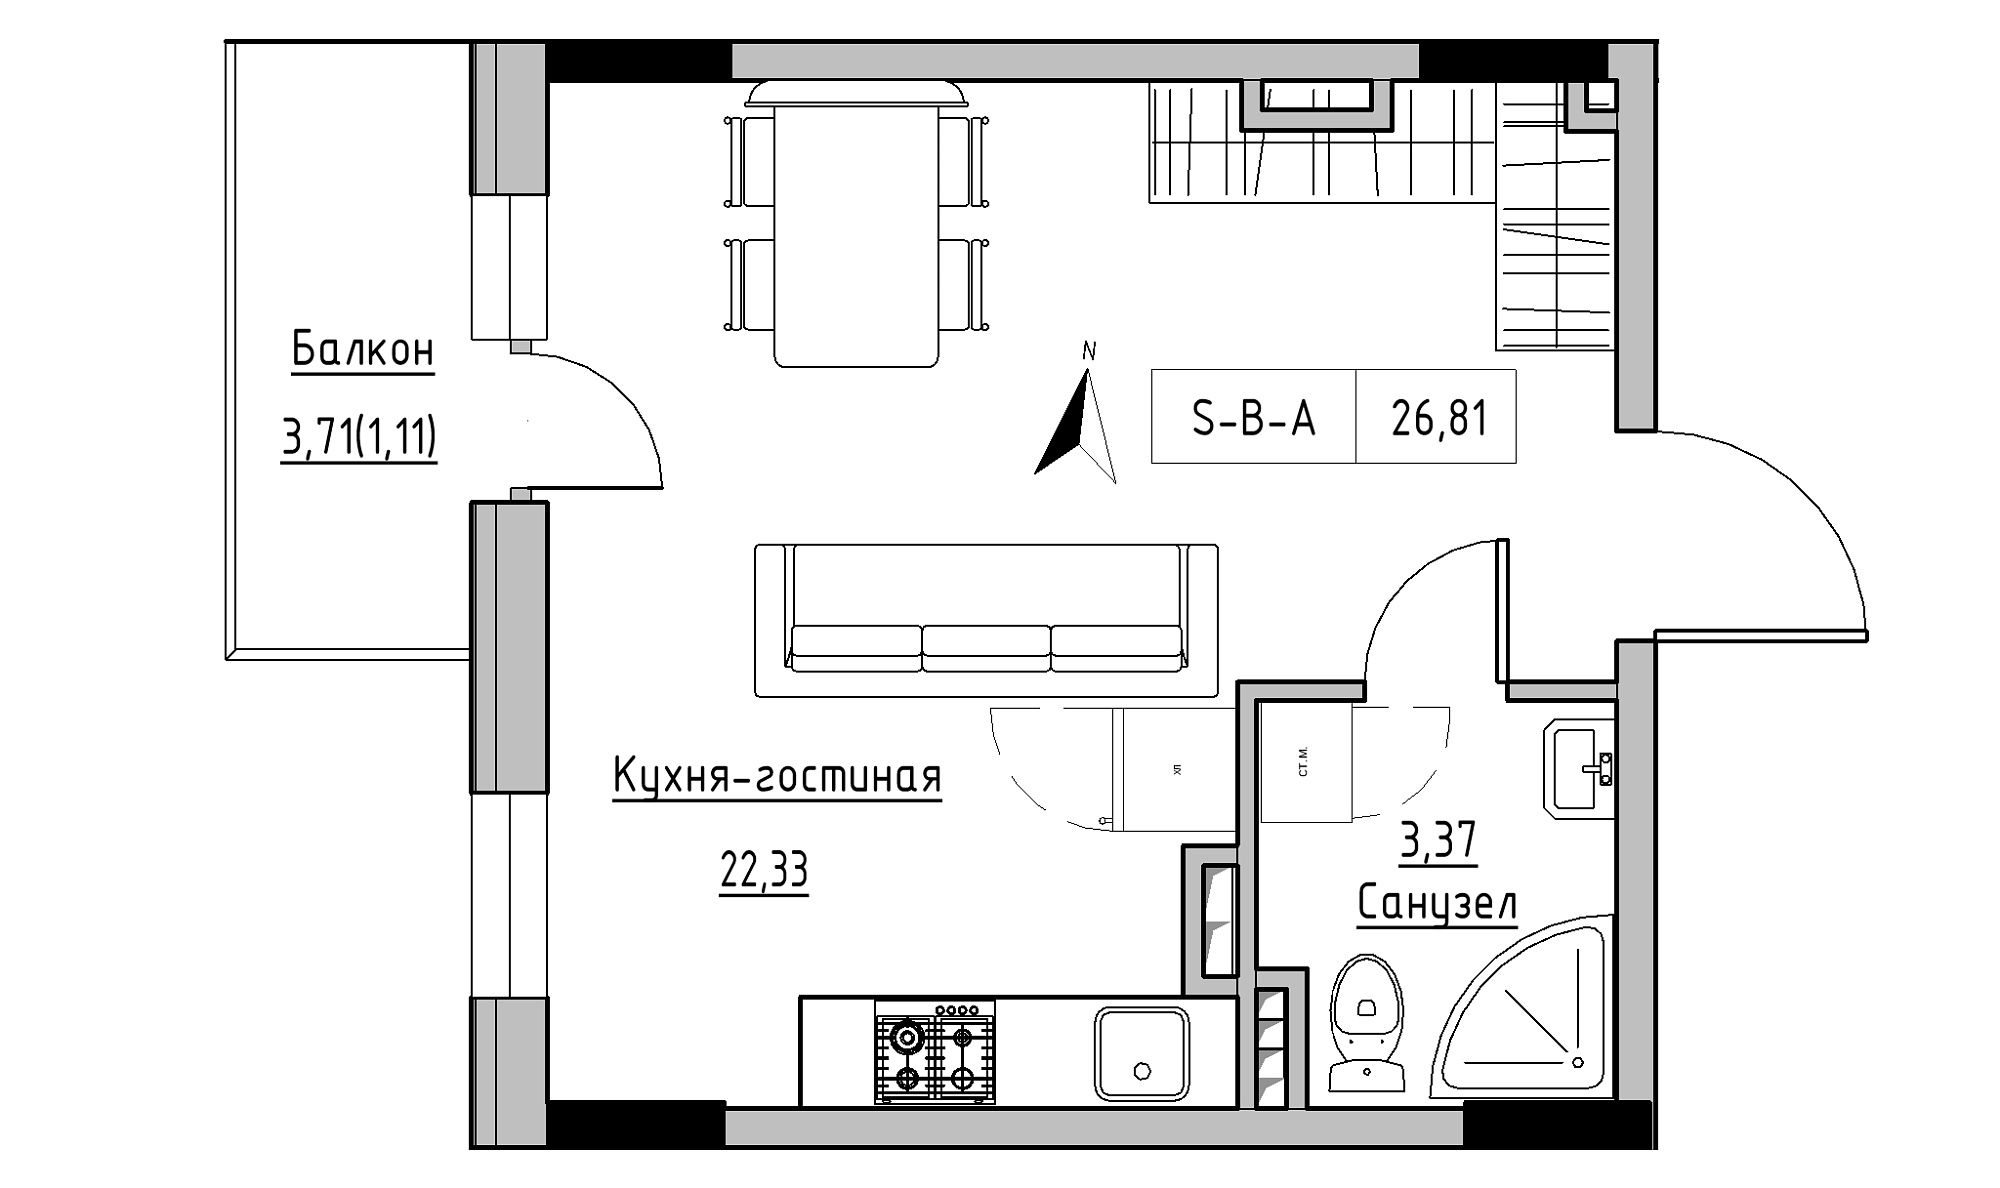 Planning 1-rm flats area 26.4m2, KS-025-03/0005.